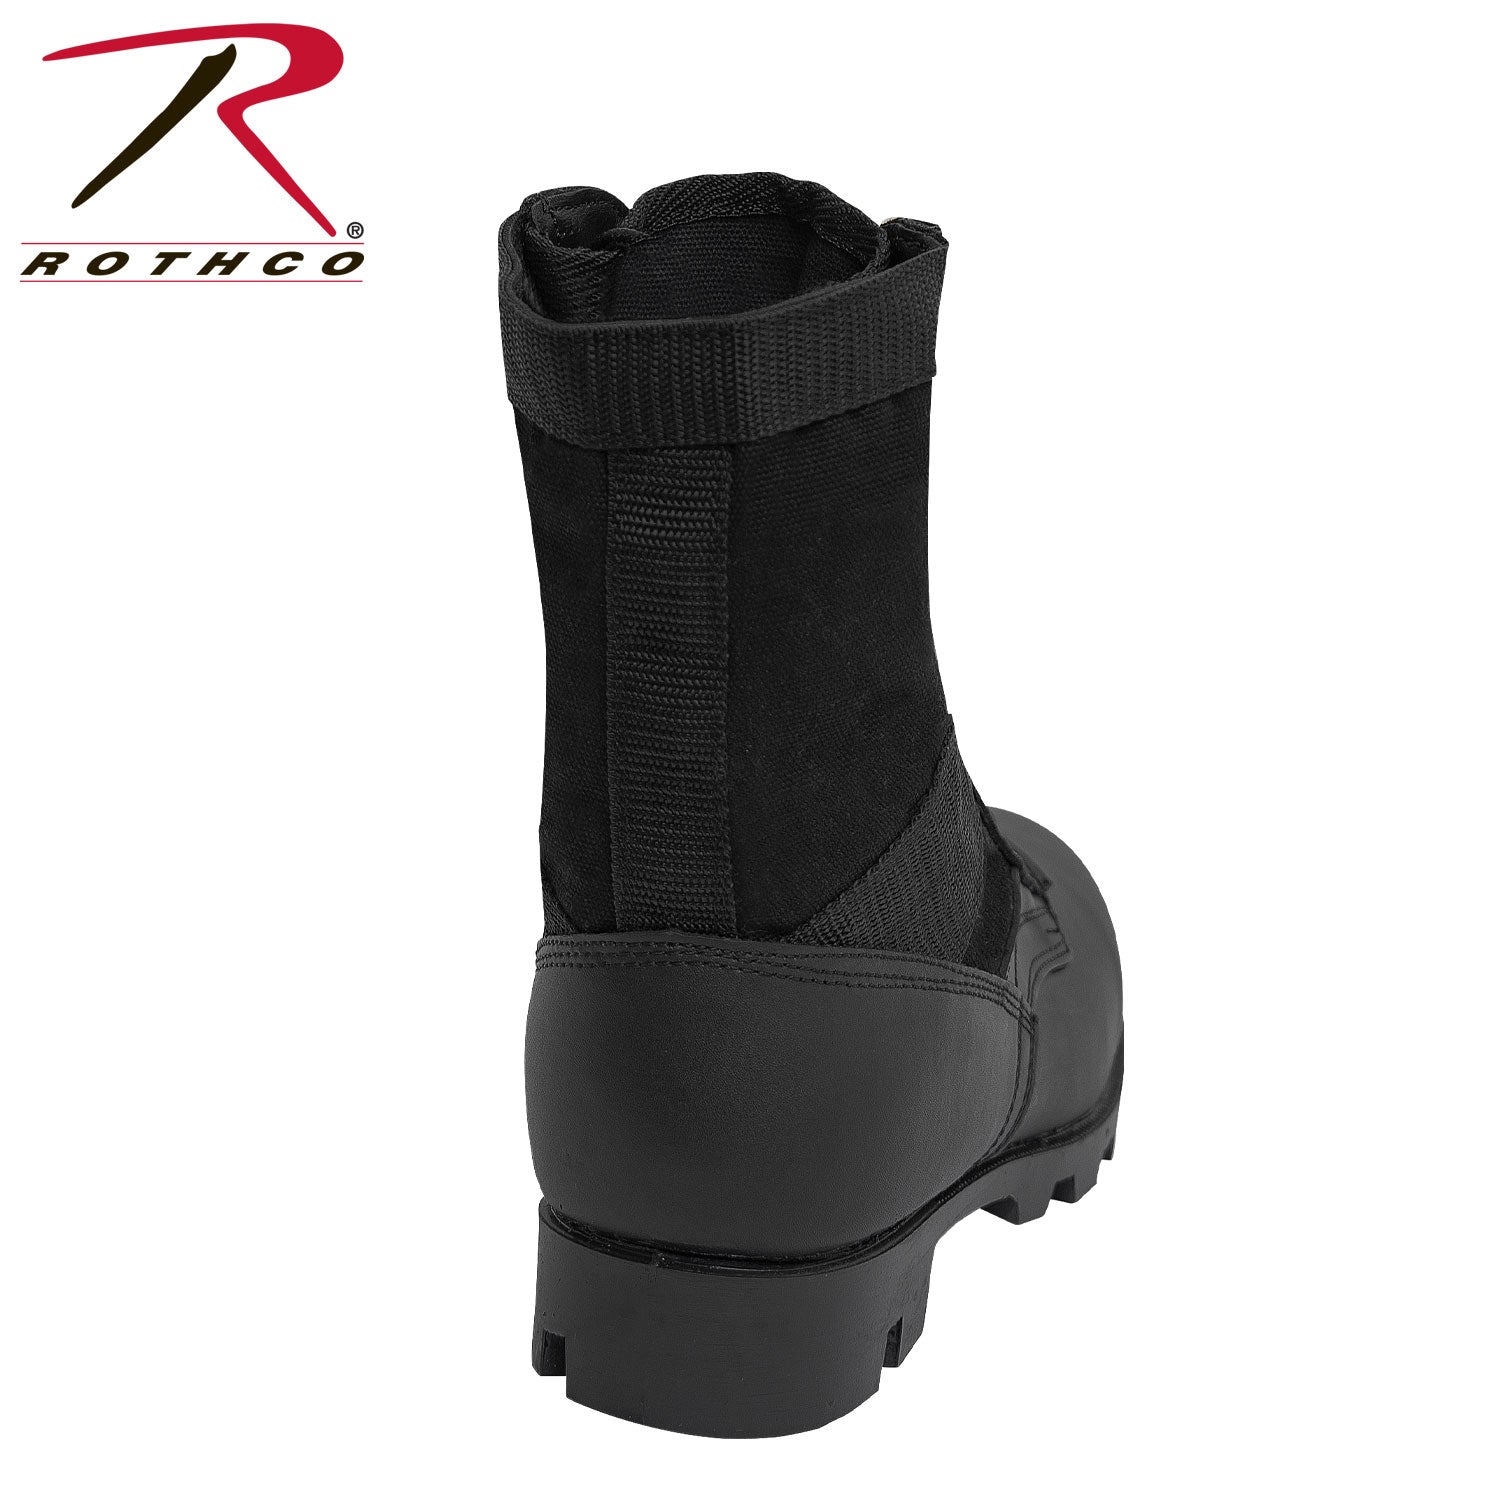 Rothco G.I. Type Black Steel Toe Jungle Boot - Tactical Choice Plus